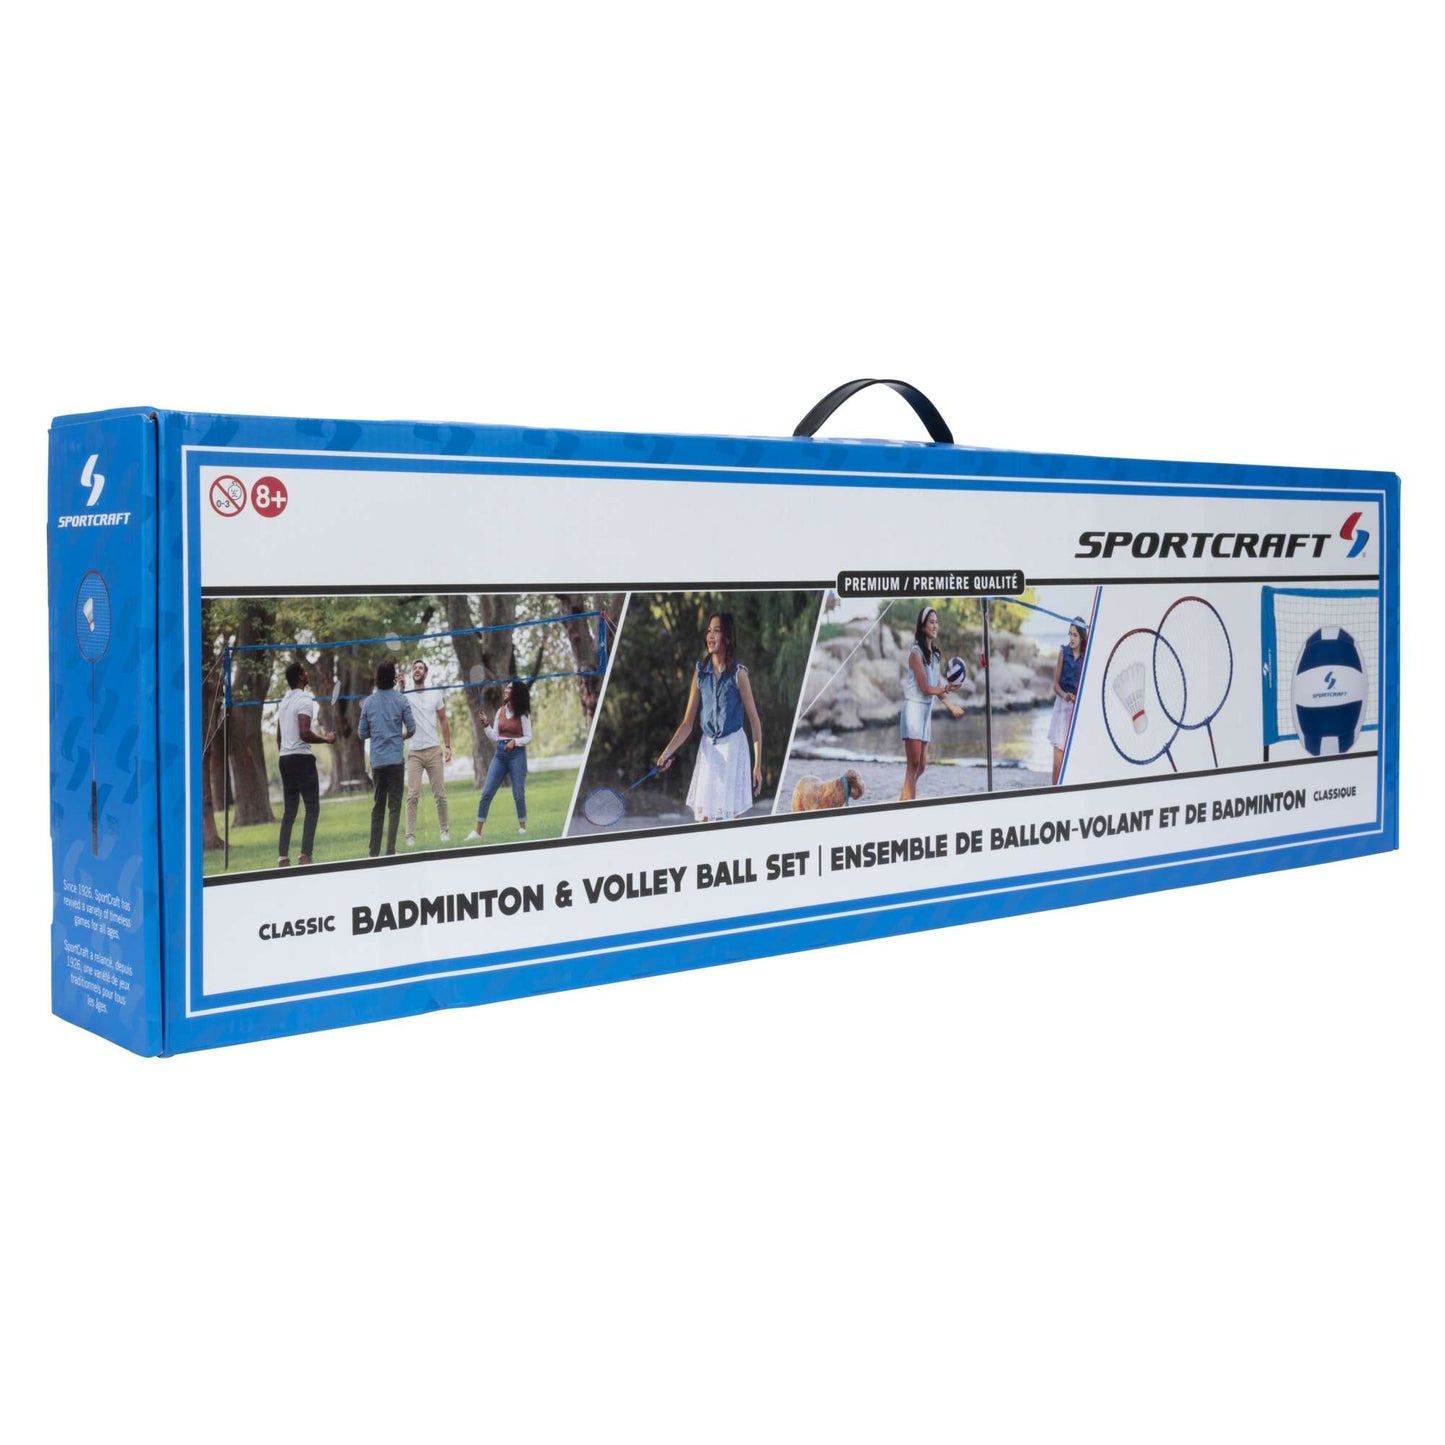 Sportcraft Badminton Volley Ball Set packaging